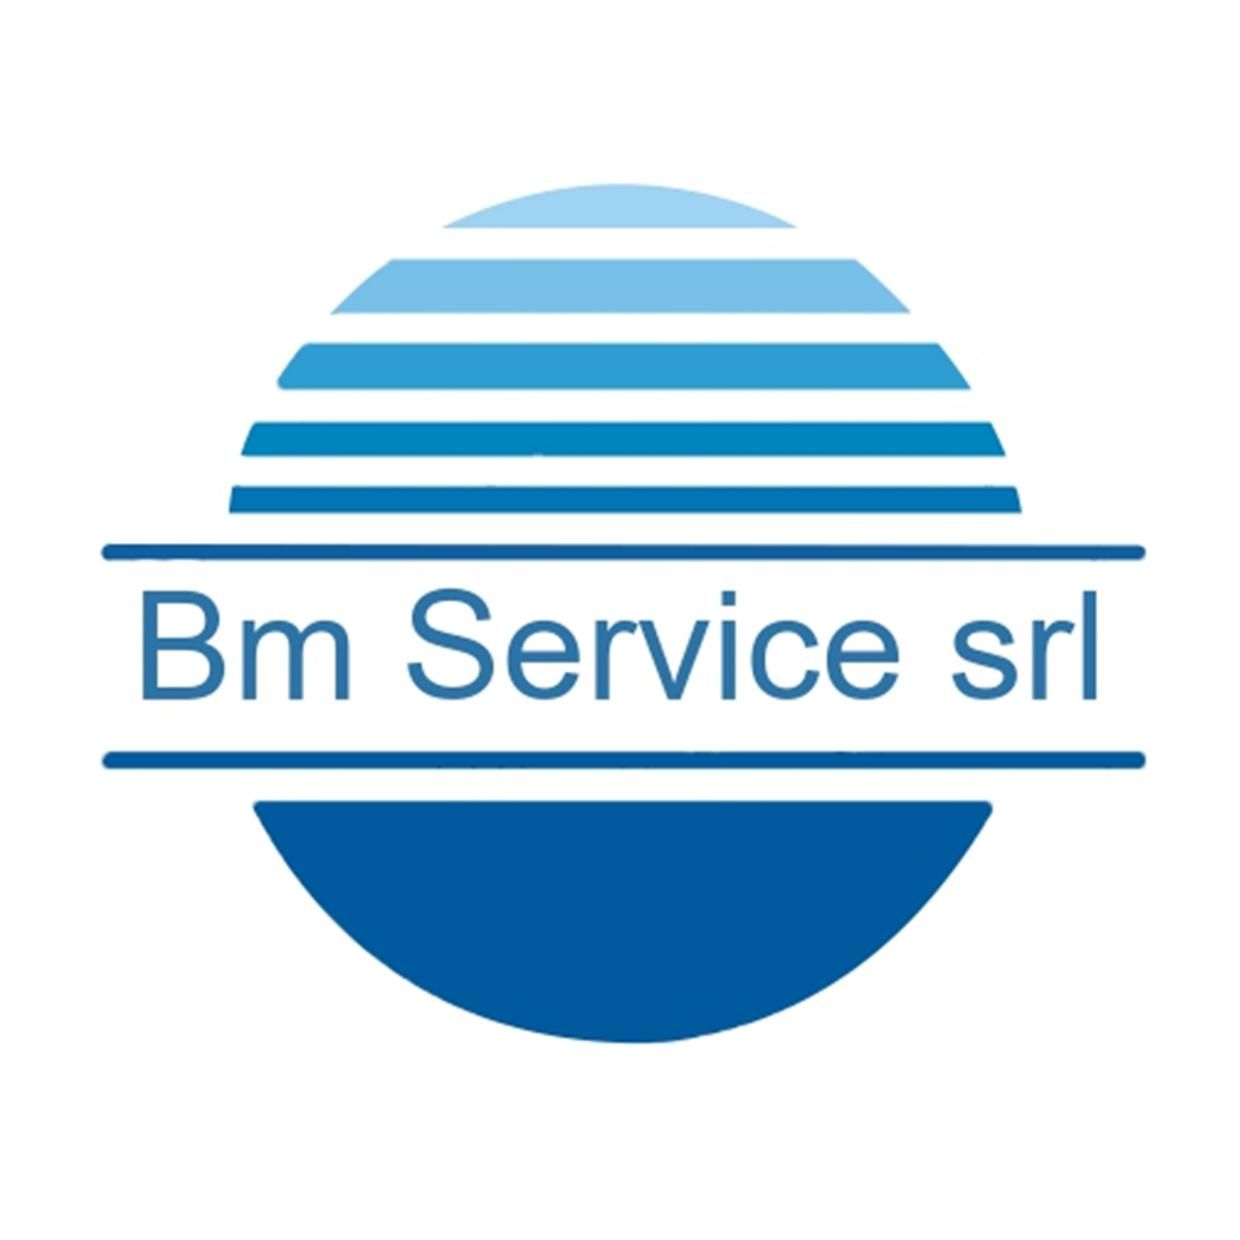 Bm Service srl 